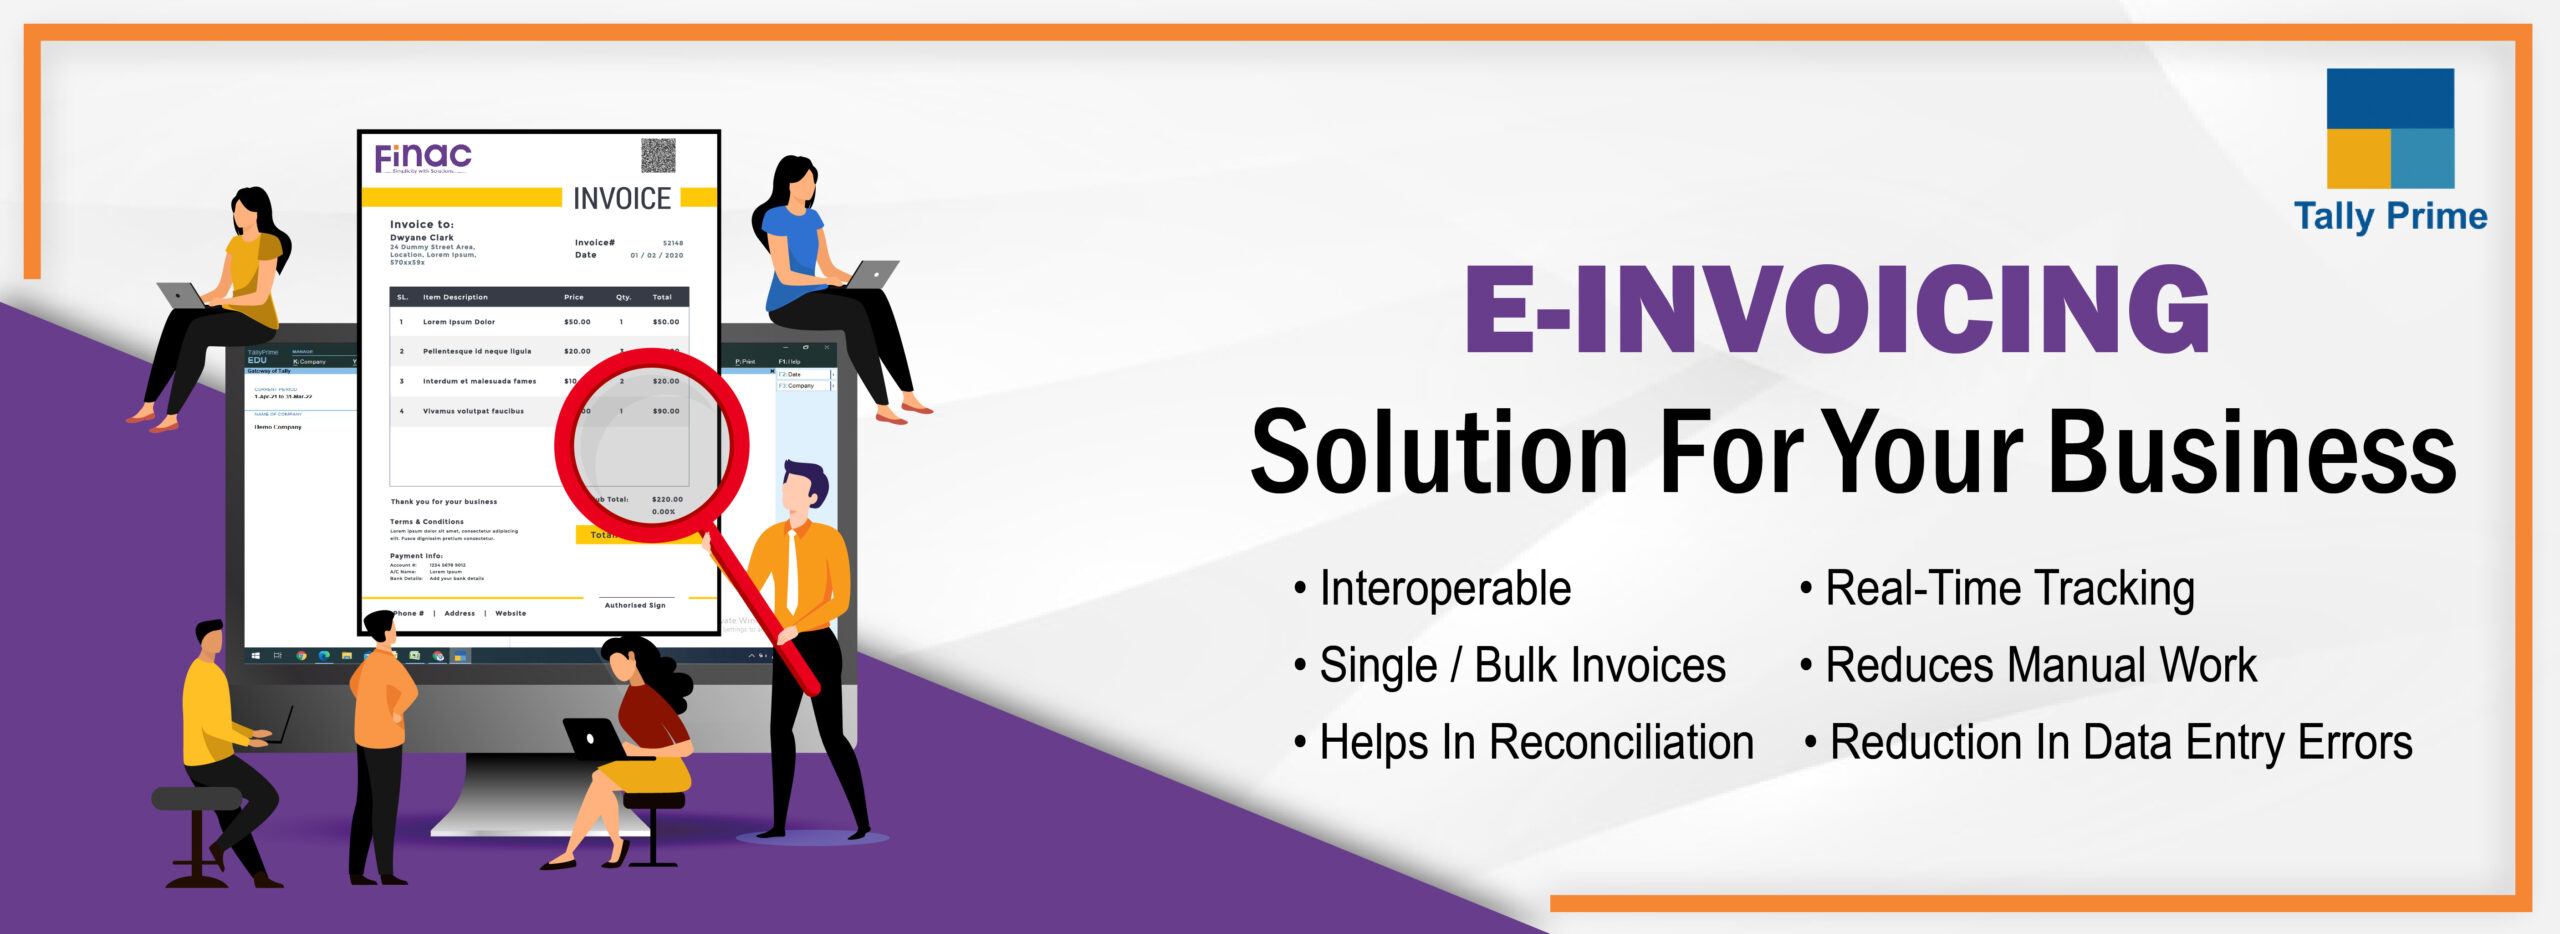 Tally Solution Company | Finac Software Company In Pune Tally Partner